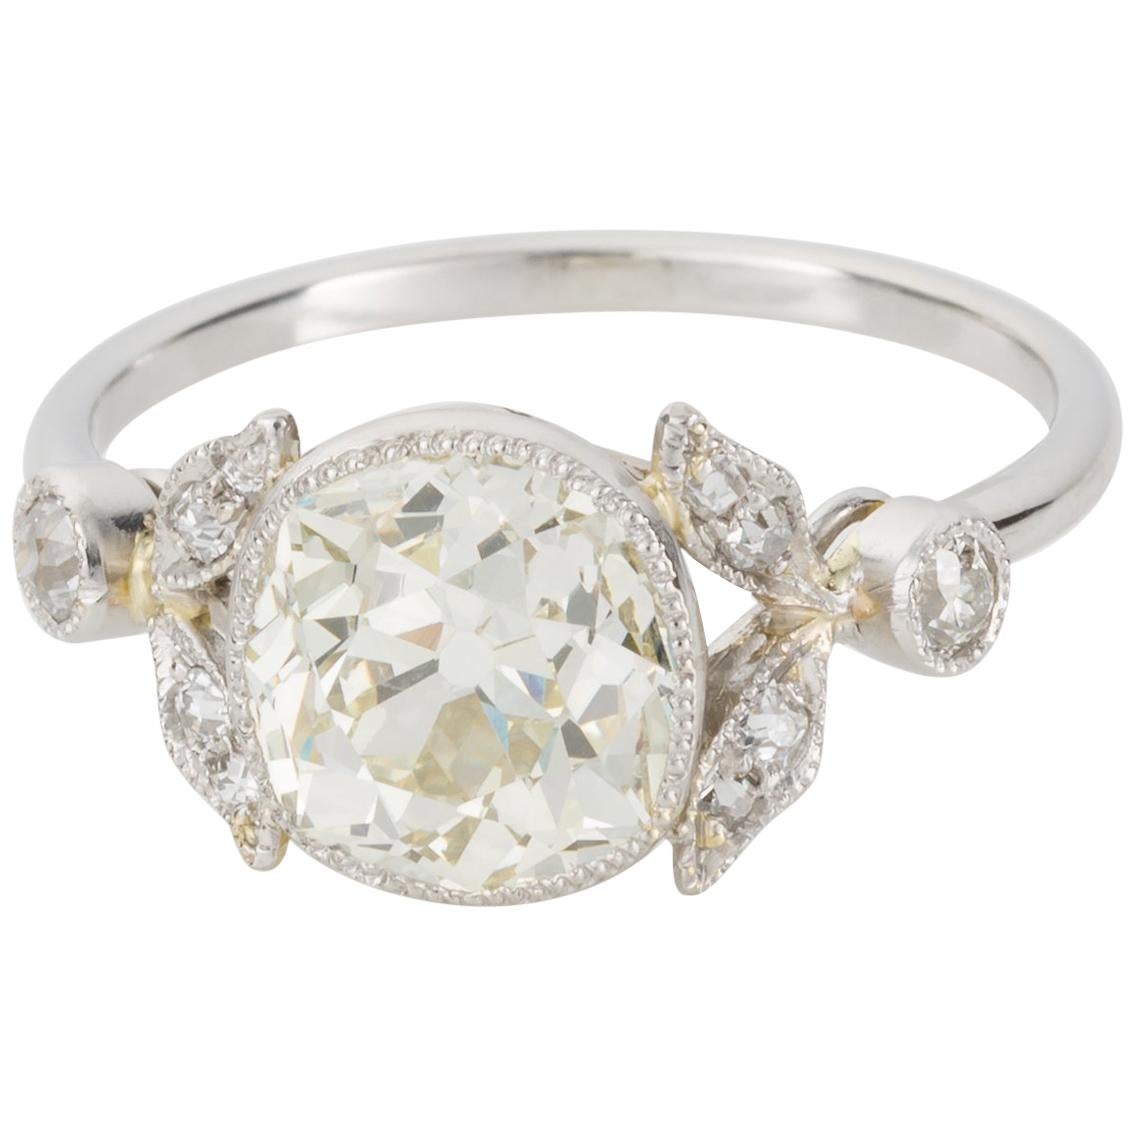 2.58 Carat Cushion Cut Diamond Platinum Engagement Ring